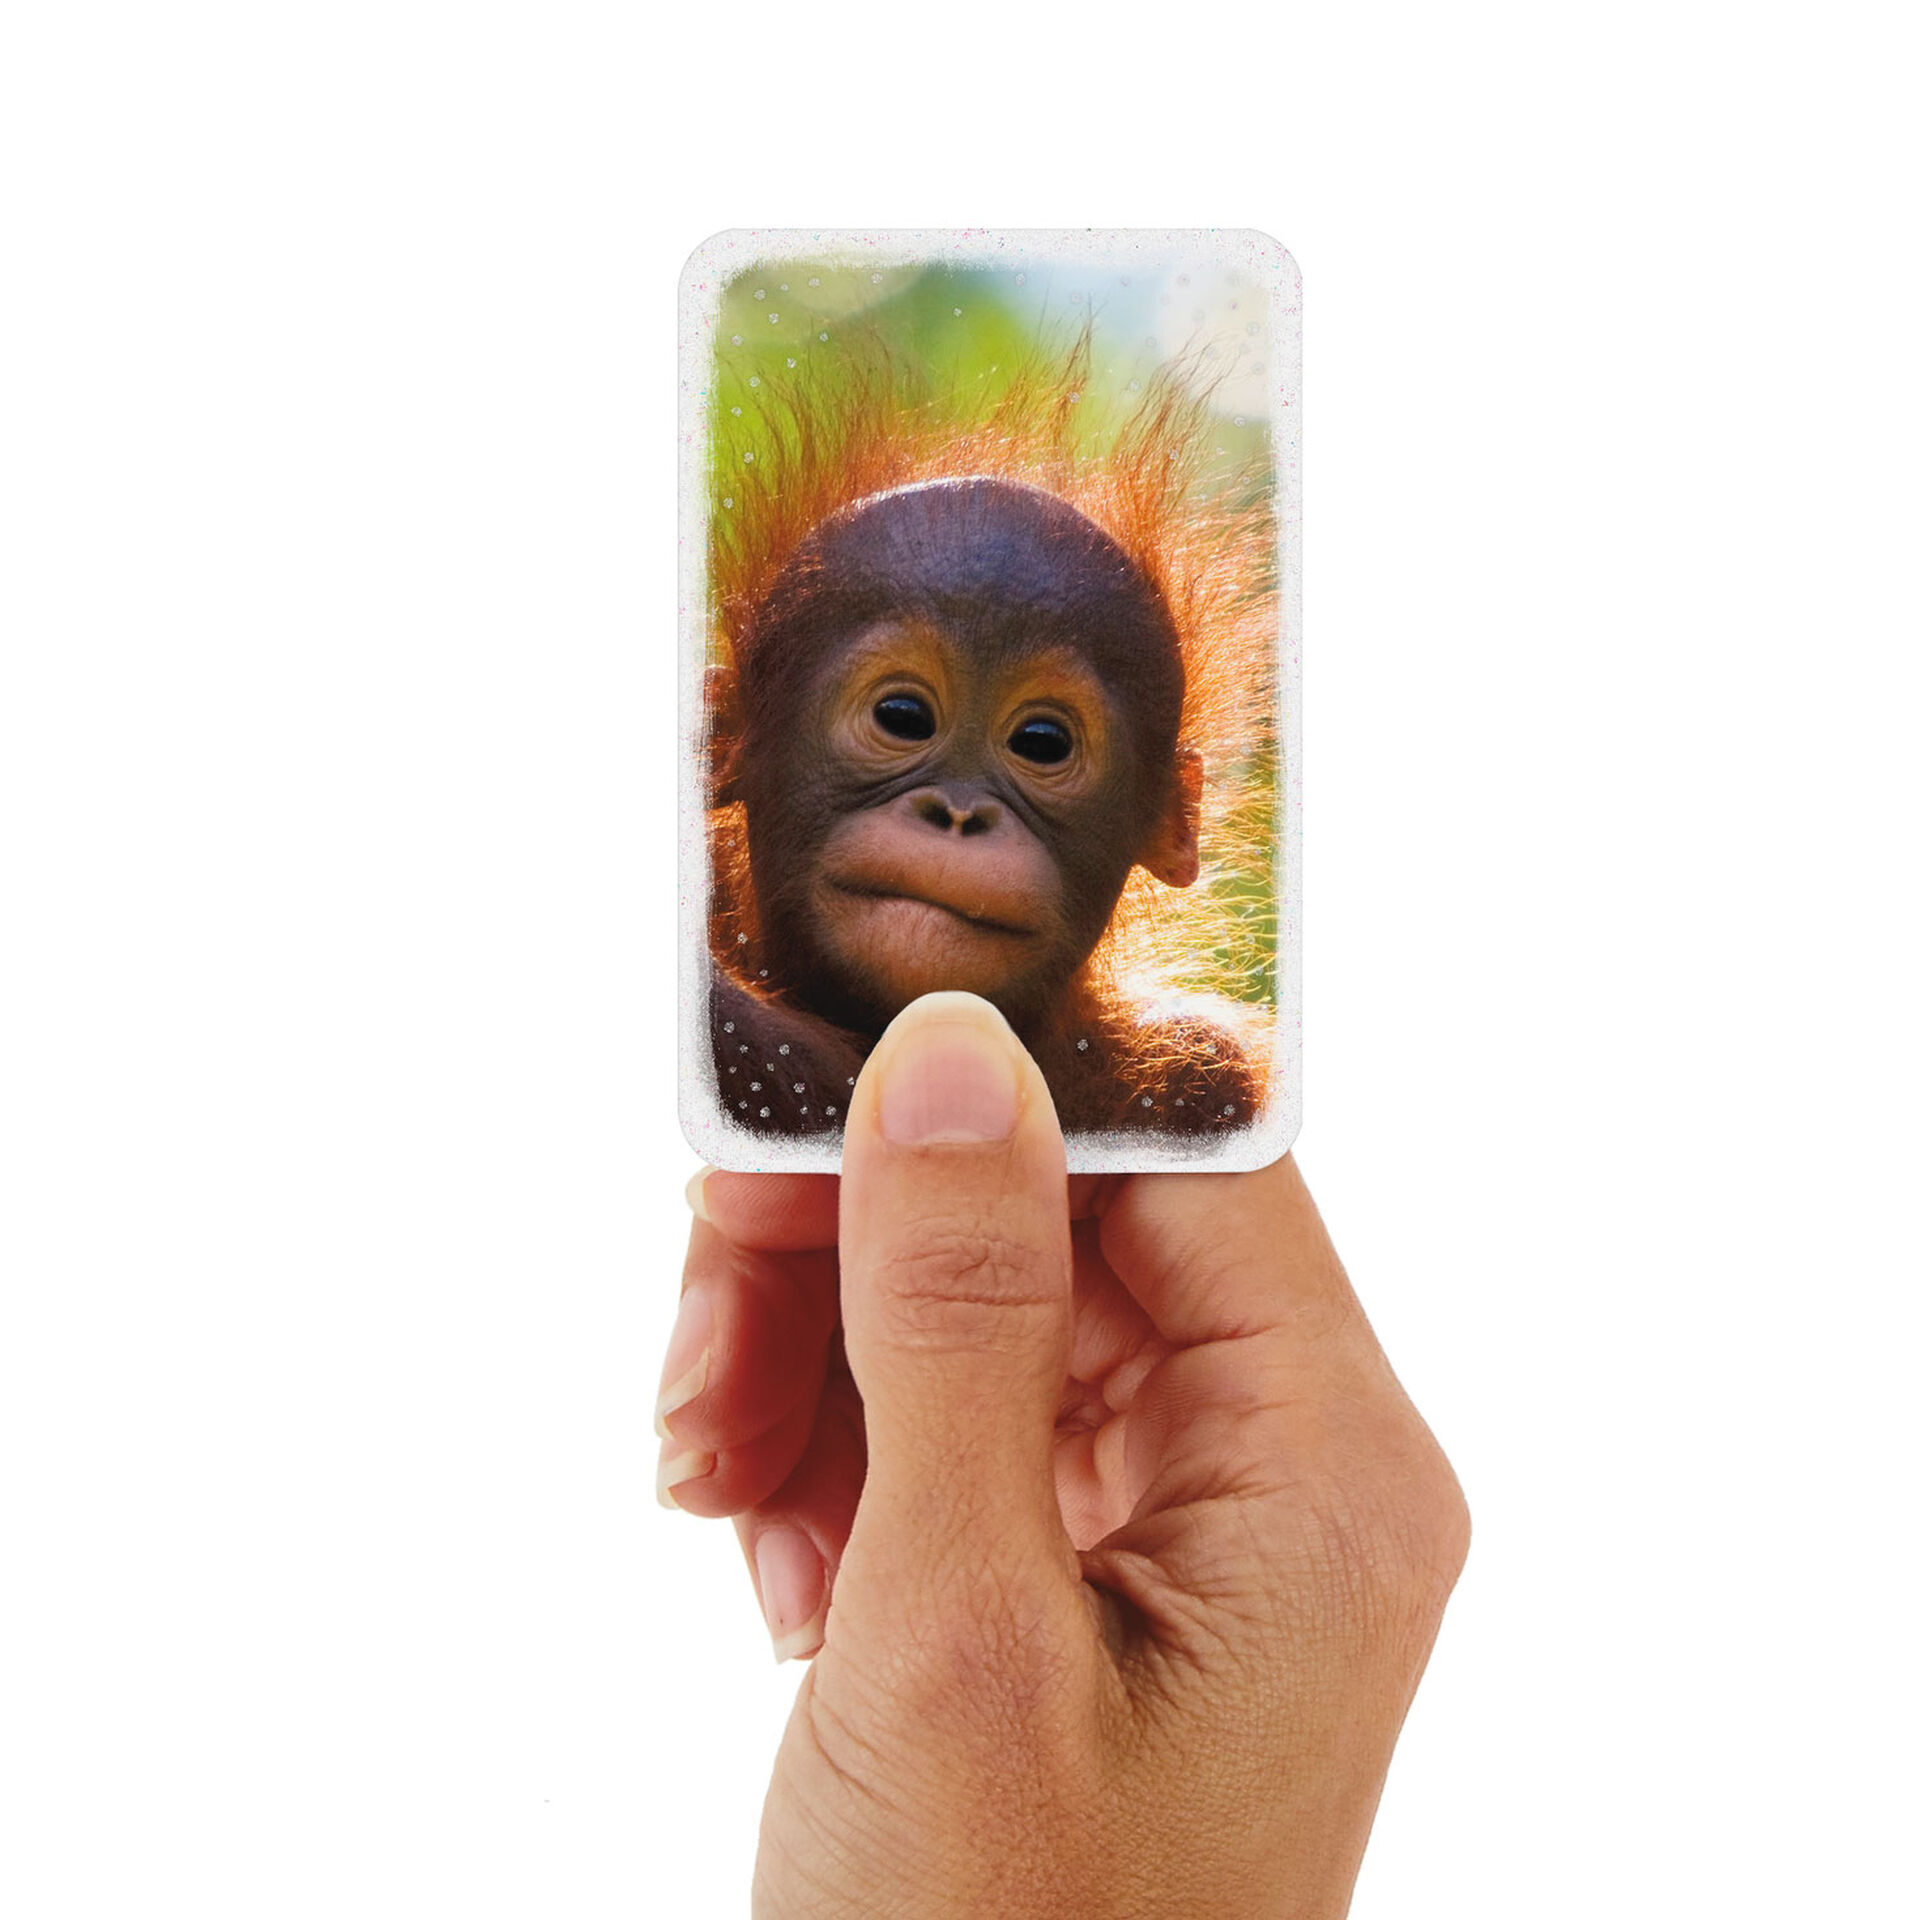 3 25 Mini Cute Baby Monkey Thinking Of You Card Greeting Cards Hallmark